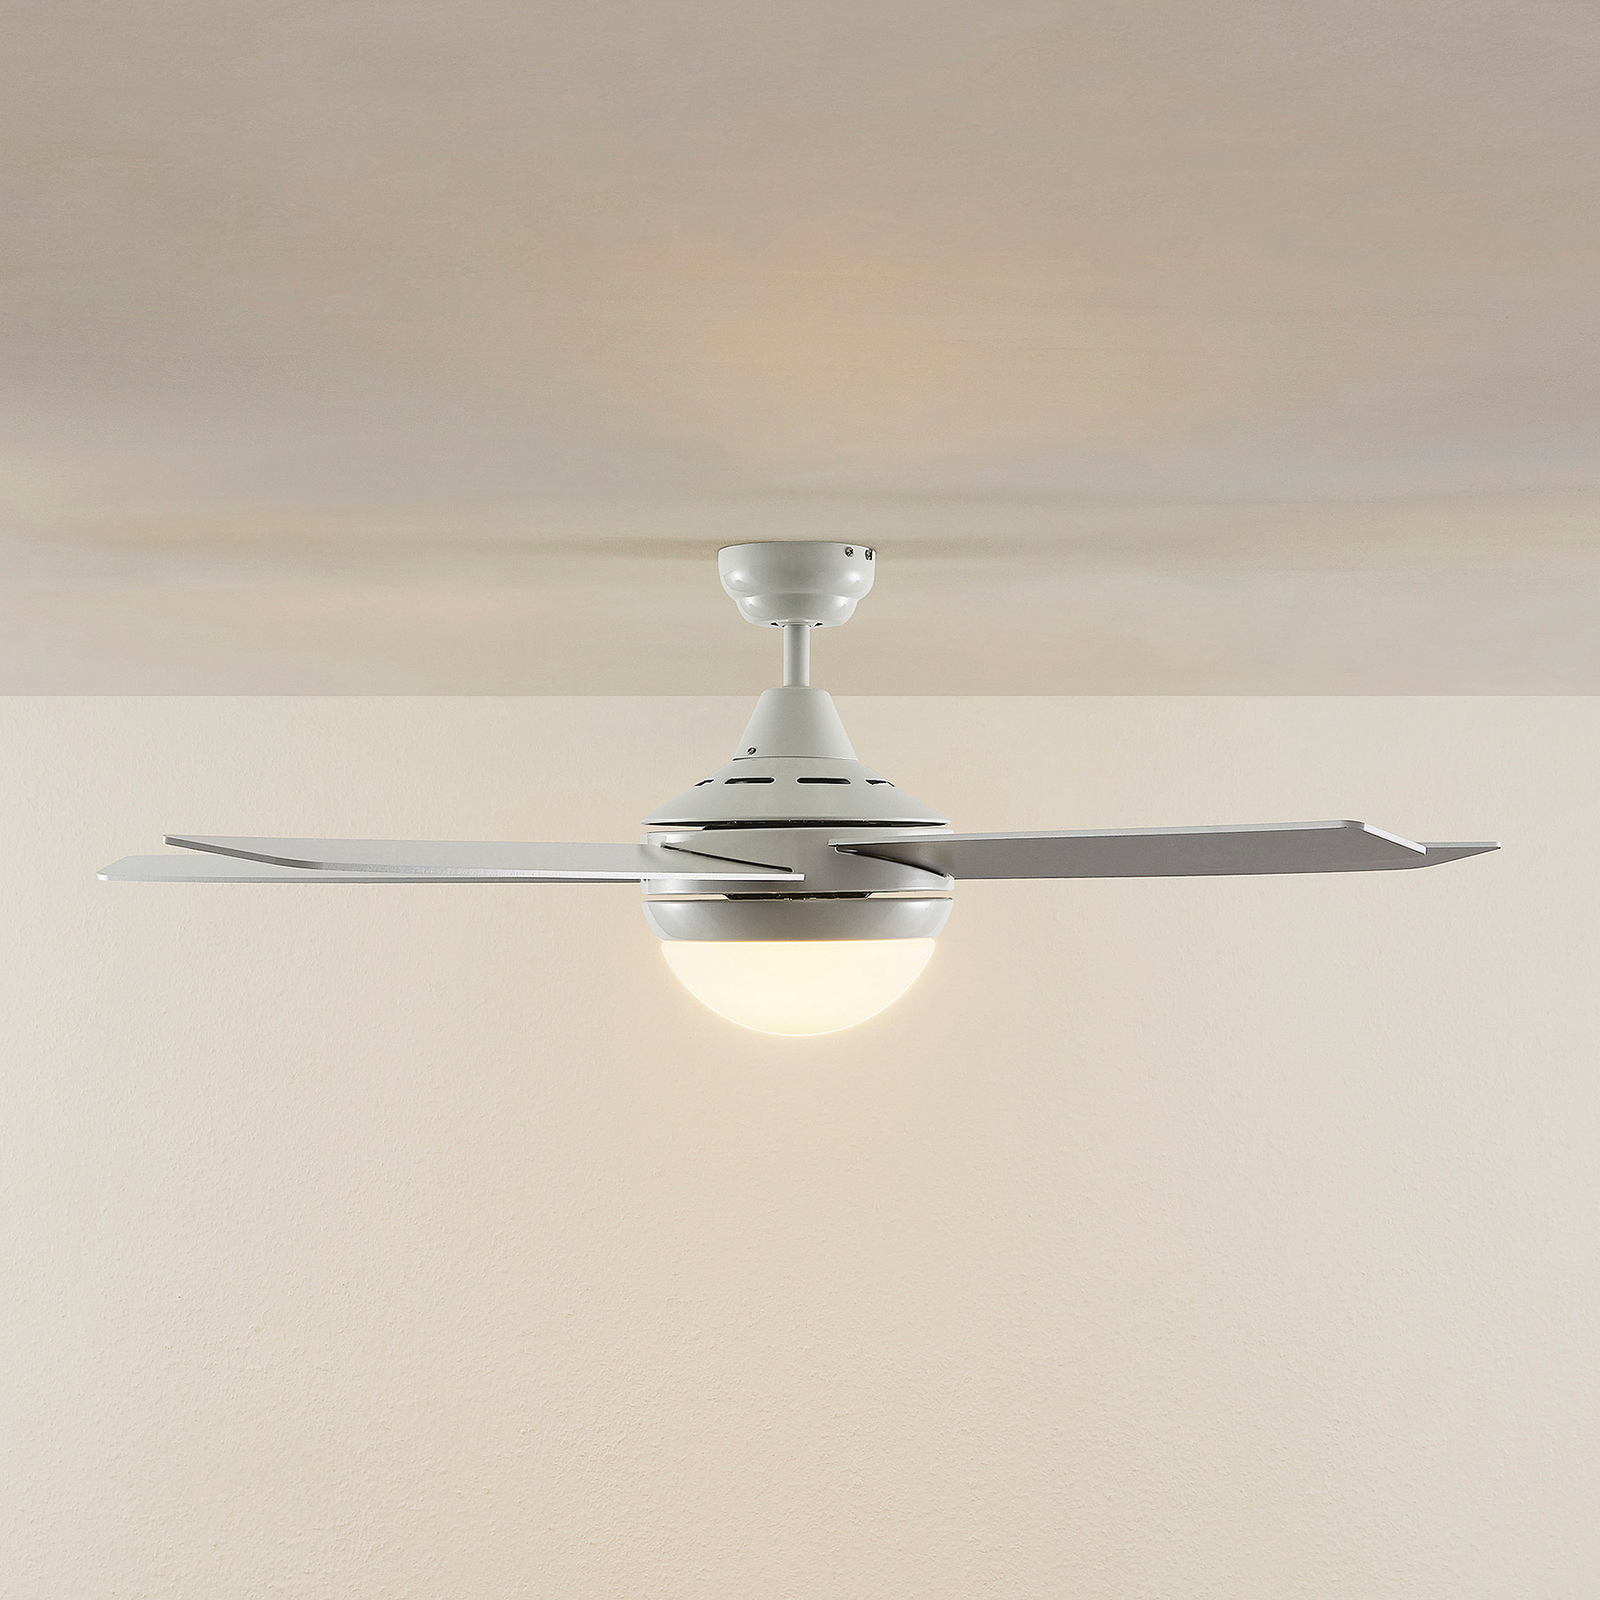 Stropni ventilator Lindby z lučjo Auraya, tih, bel, 130 cm